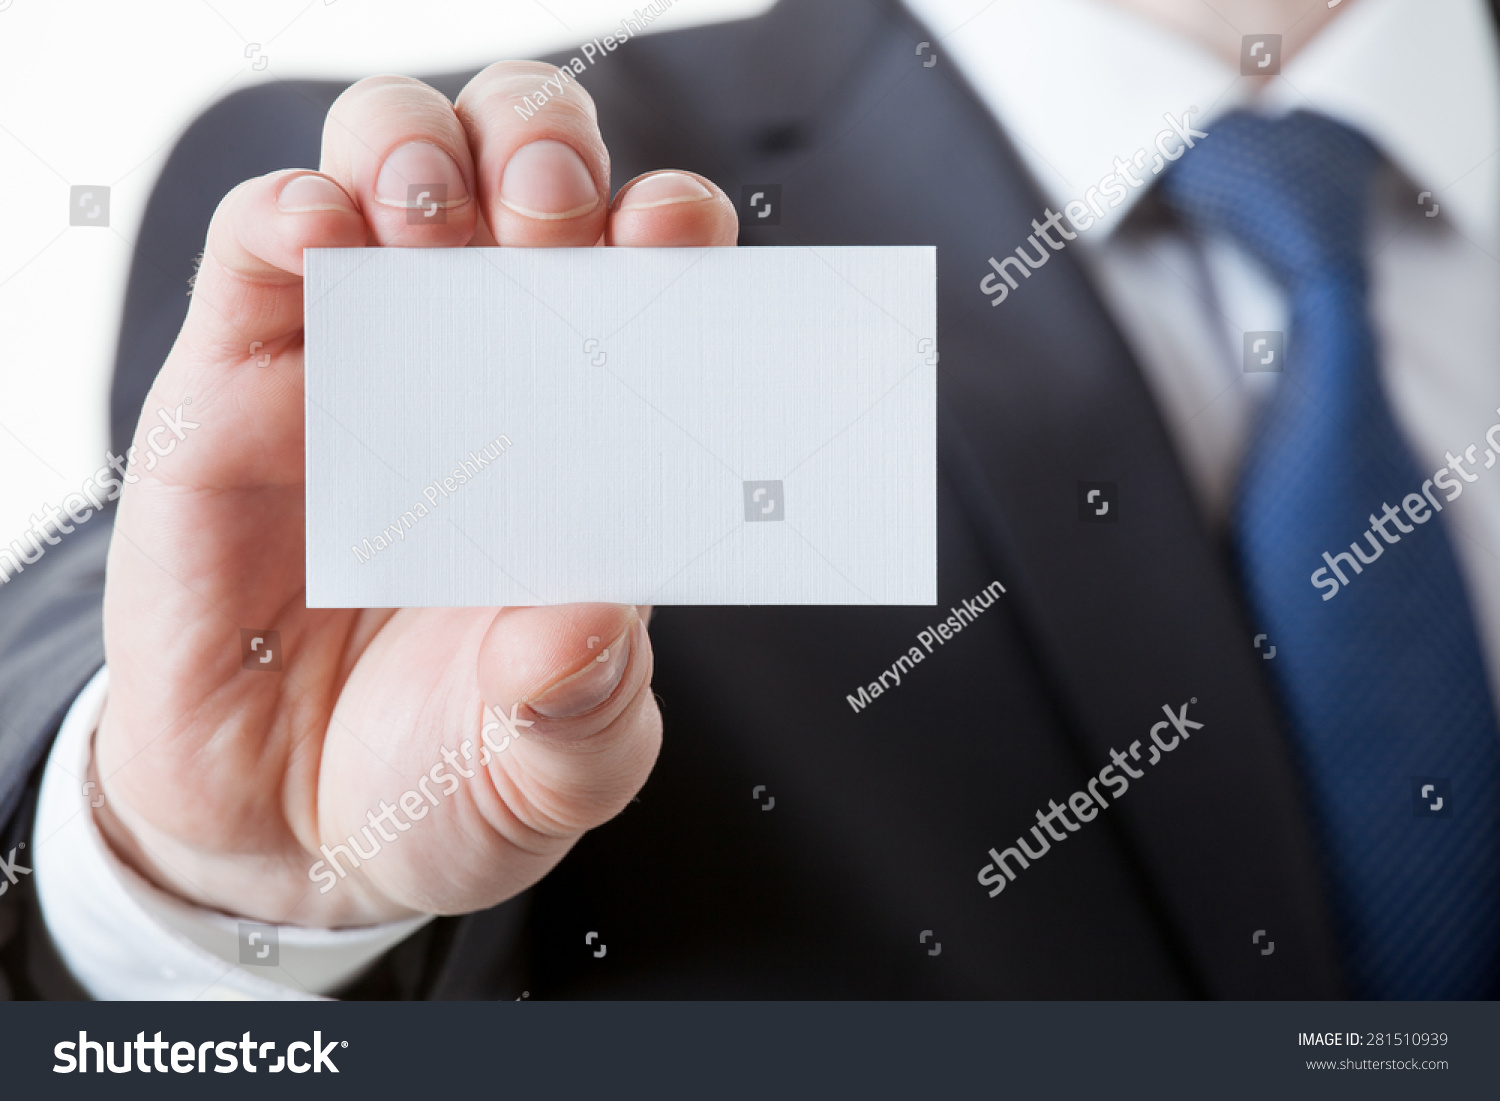 Unrecognizable businessman holding a visiting card, closeup shot #281510939